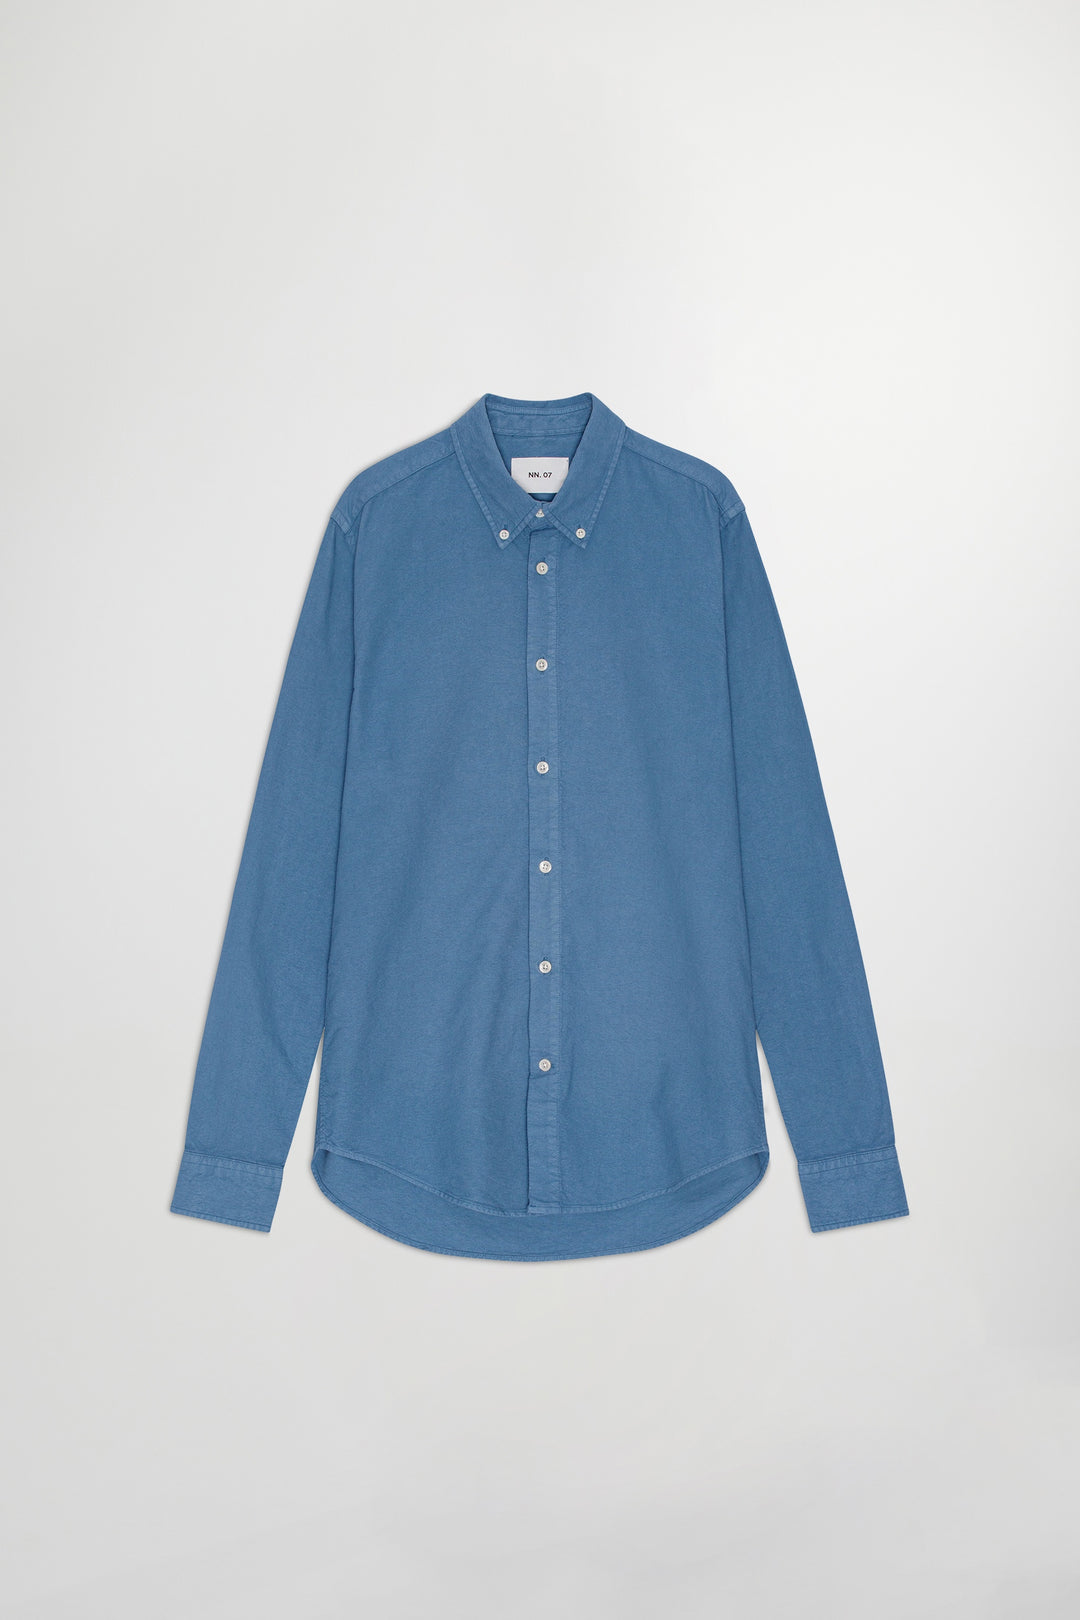 NN07 Arne No PKT 5725 Shirt in Gray Blue | Buster McGee